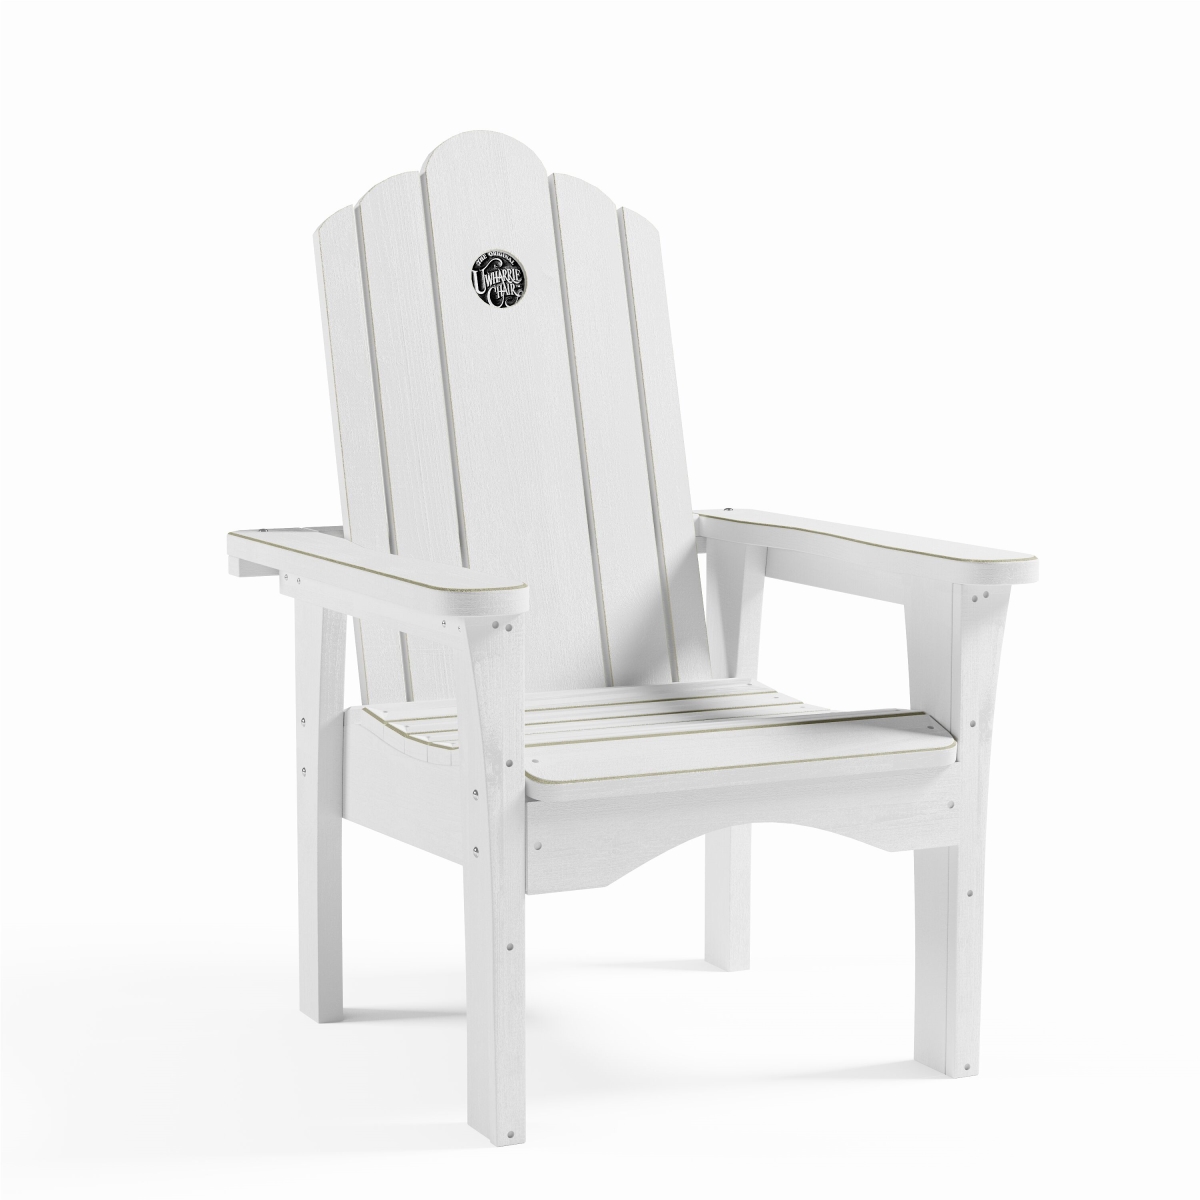 S114-079 Original Wood Lounge Chair, Gray Ice Pine - 30.5 X 33.5 X 43.5 In.